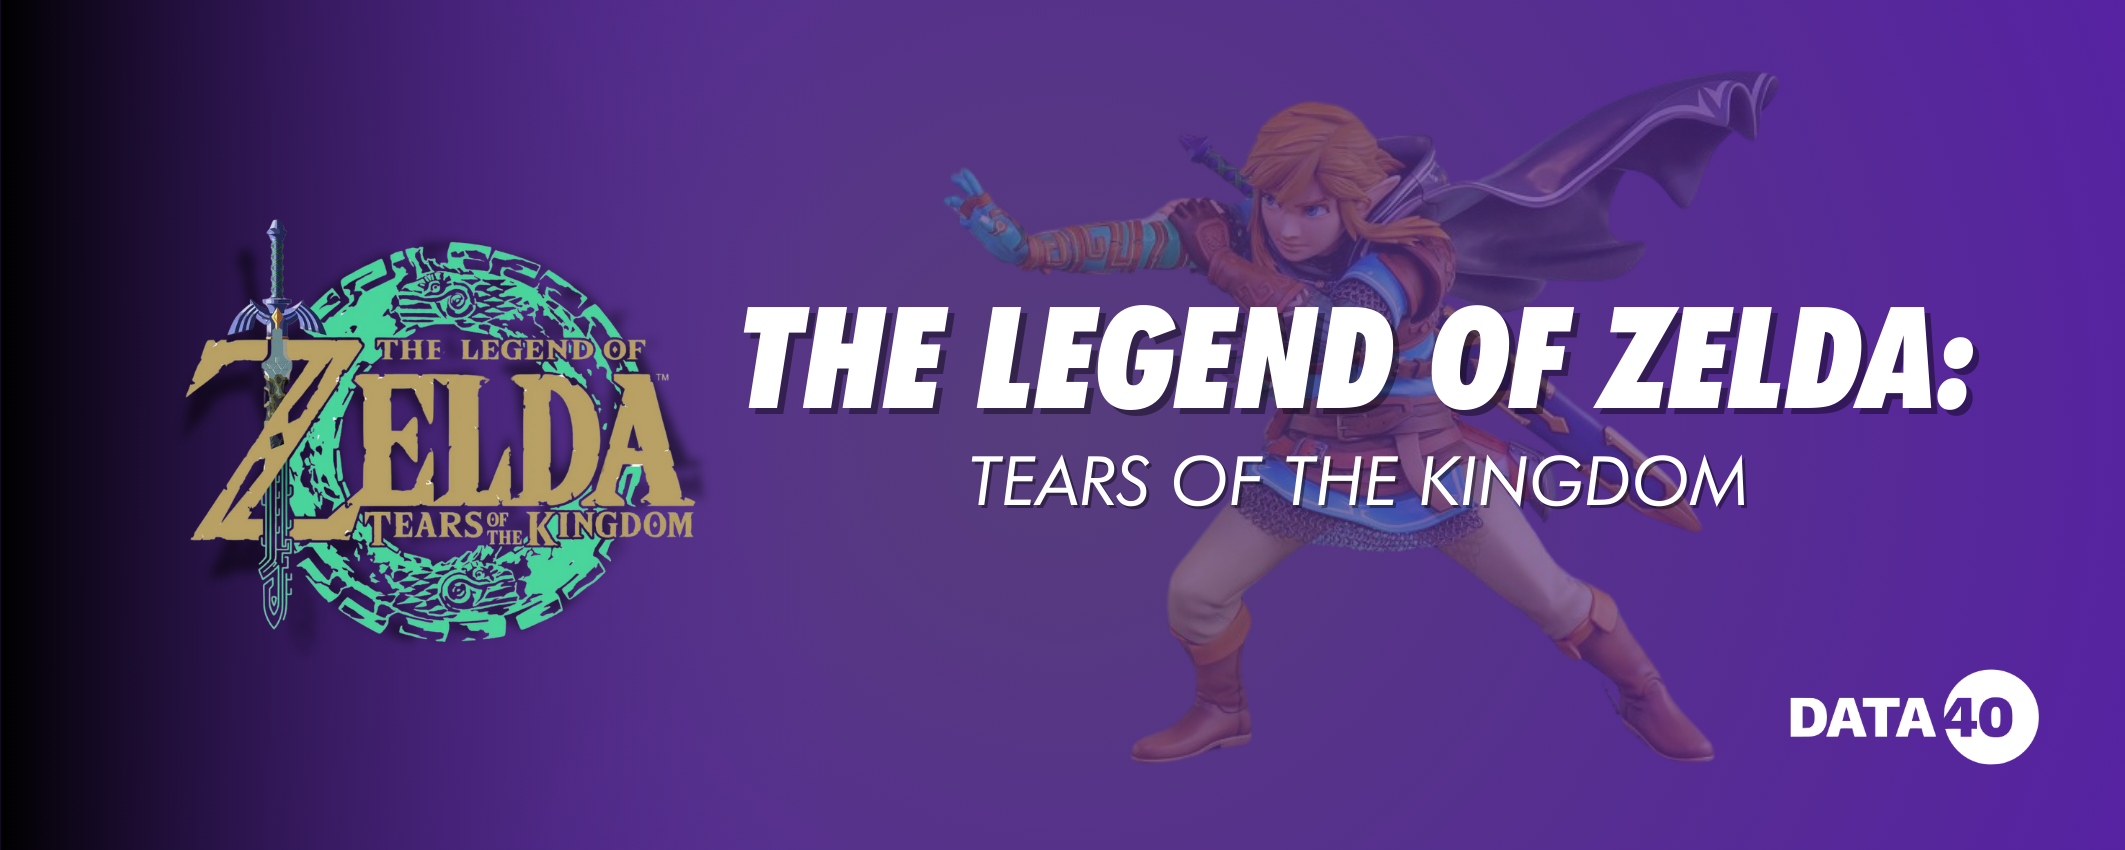 The Legend of Zelda_ Tears of the Kingdom